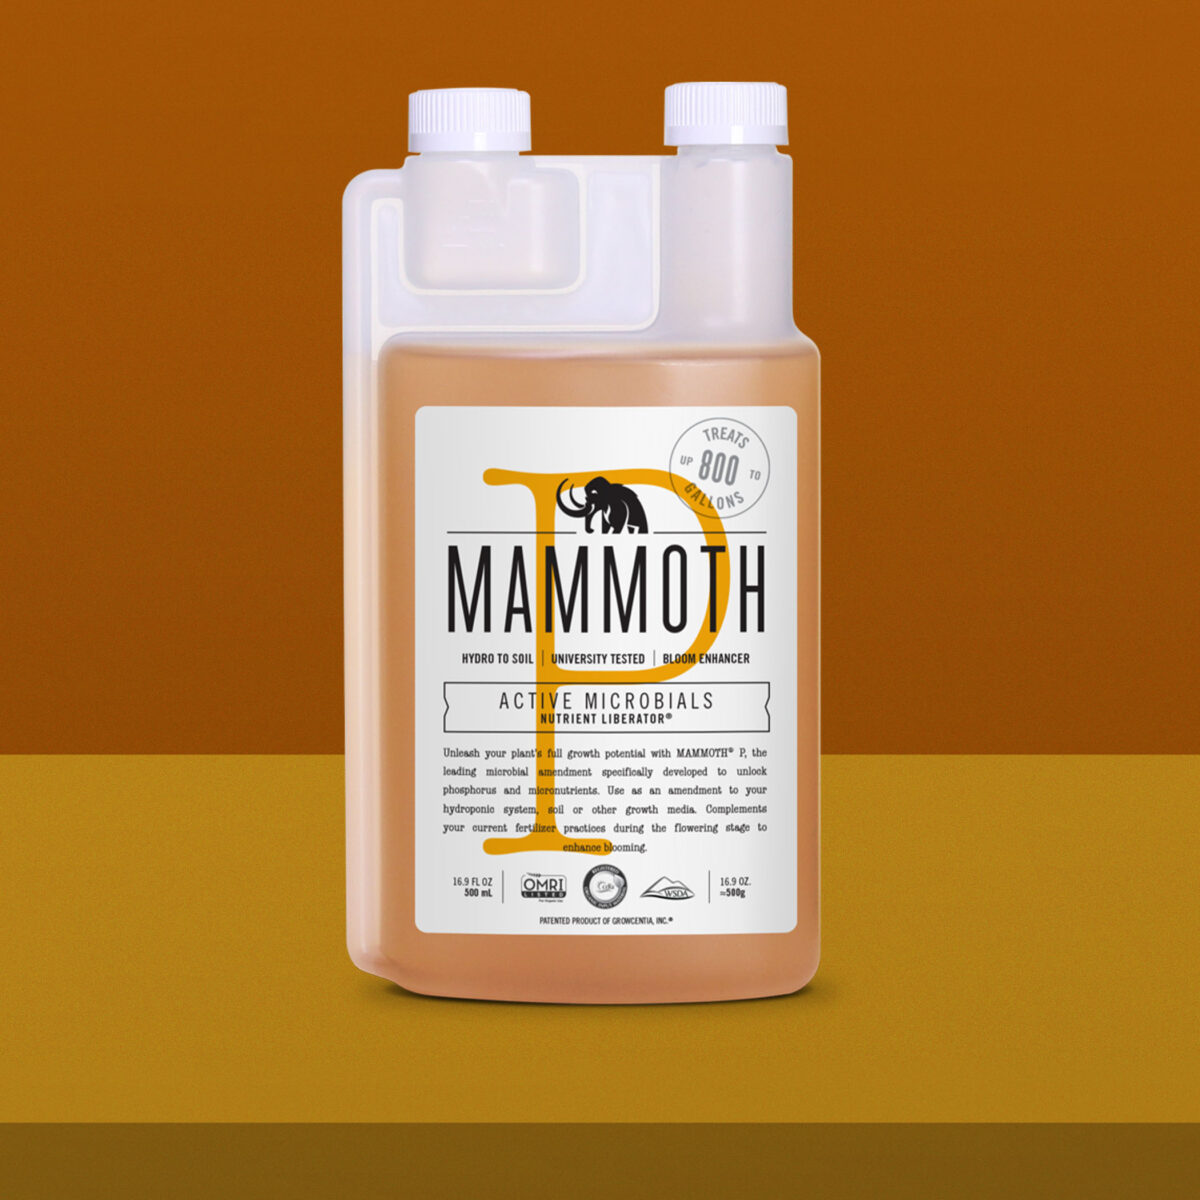 Mammoth P 500mL Product Image